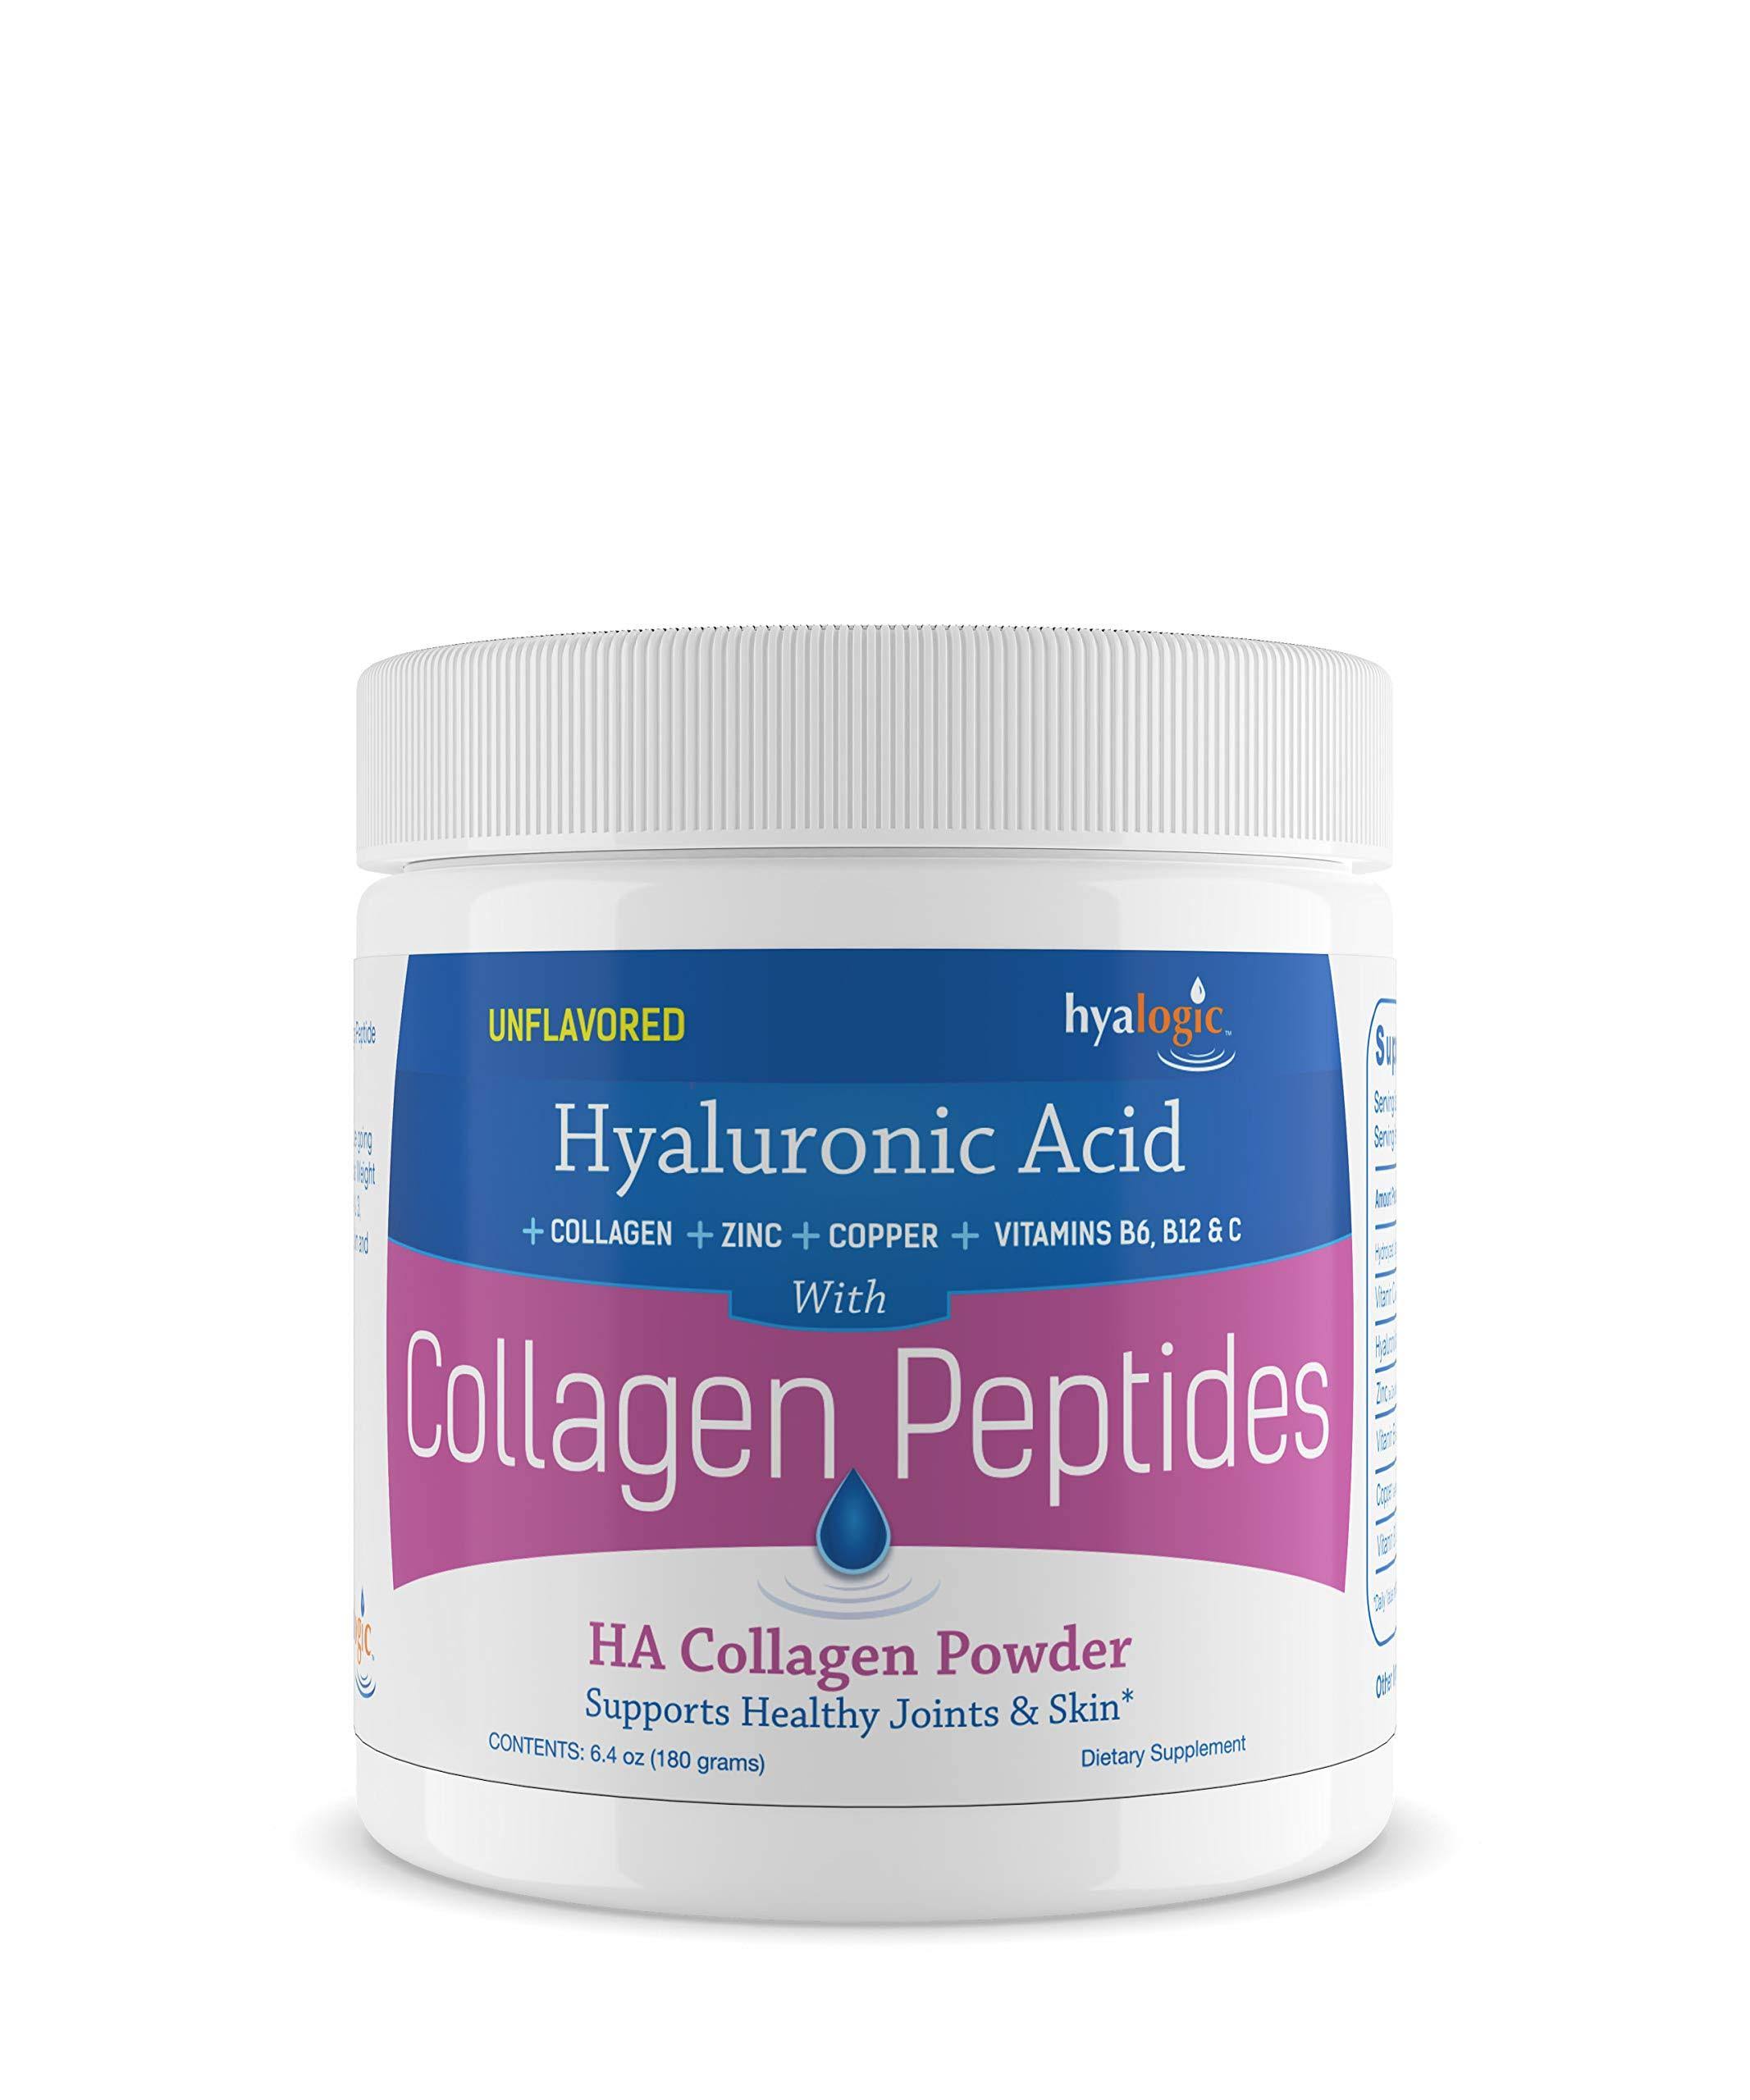 Hyalogic LLC HA Collagen Powder - Hyaluronic Acid with Collagen Peptides, Unflavored, 6.4oz